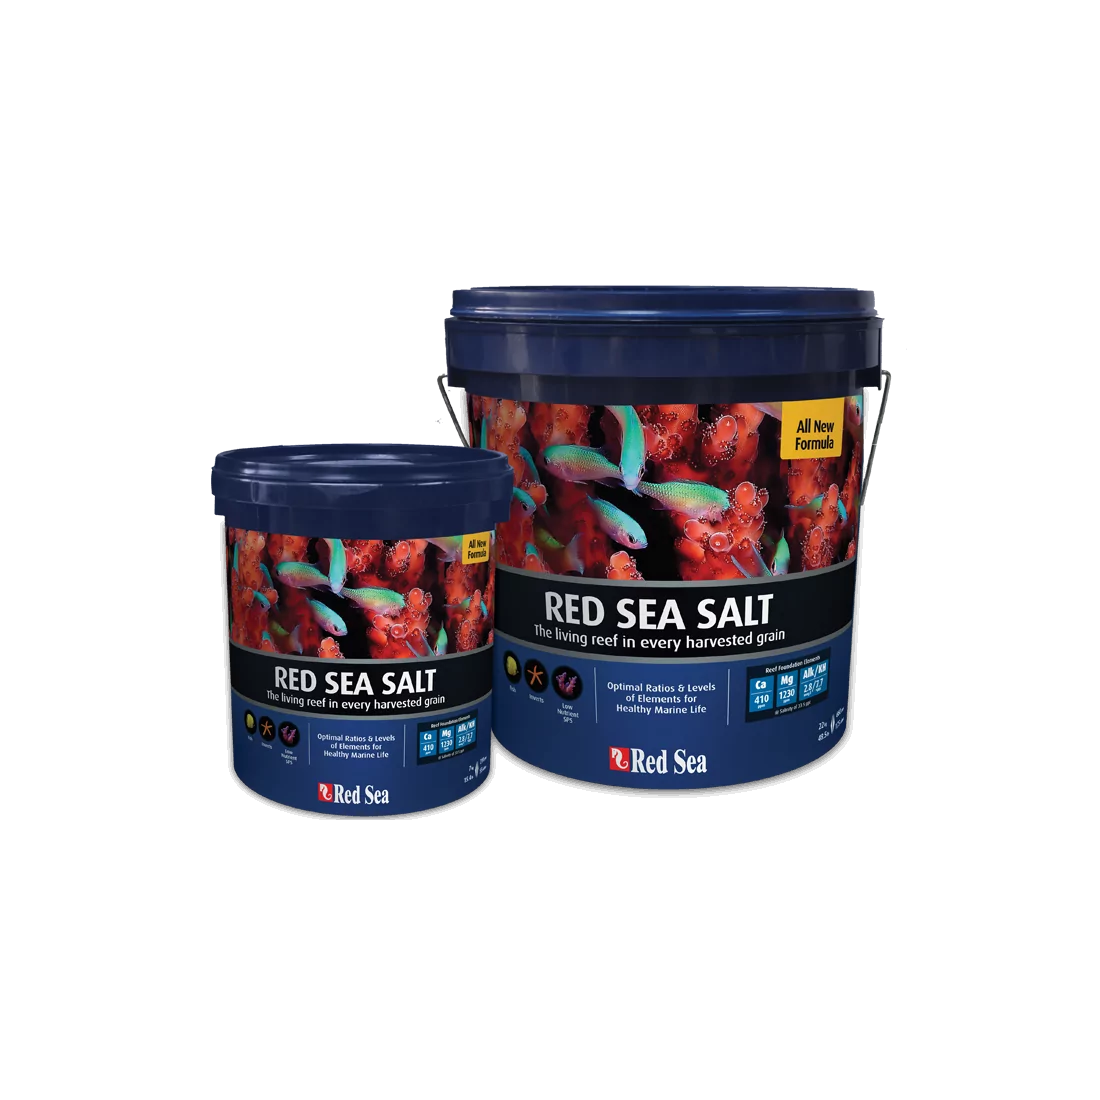 Red sea salt 7kg